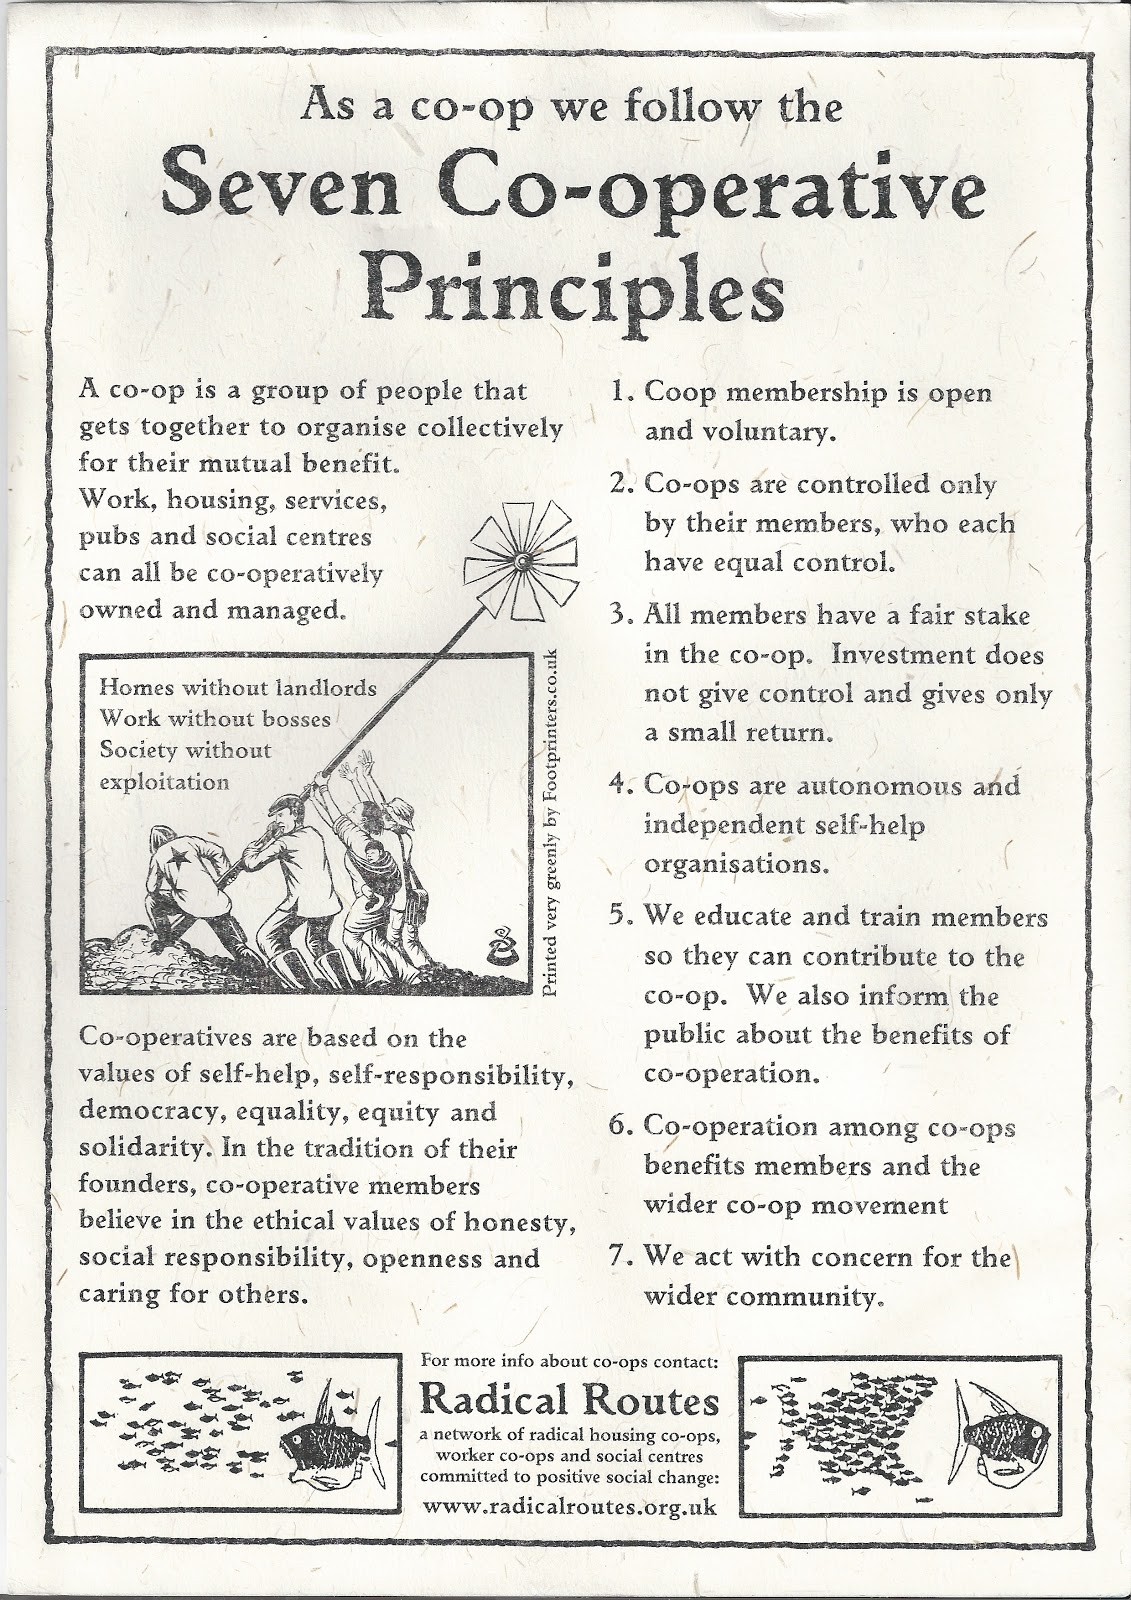 Co-operative principles